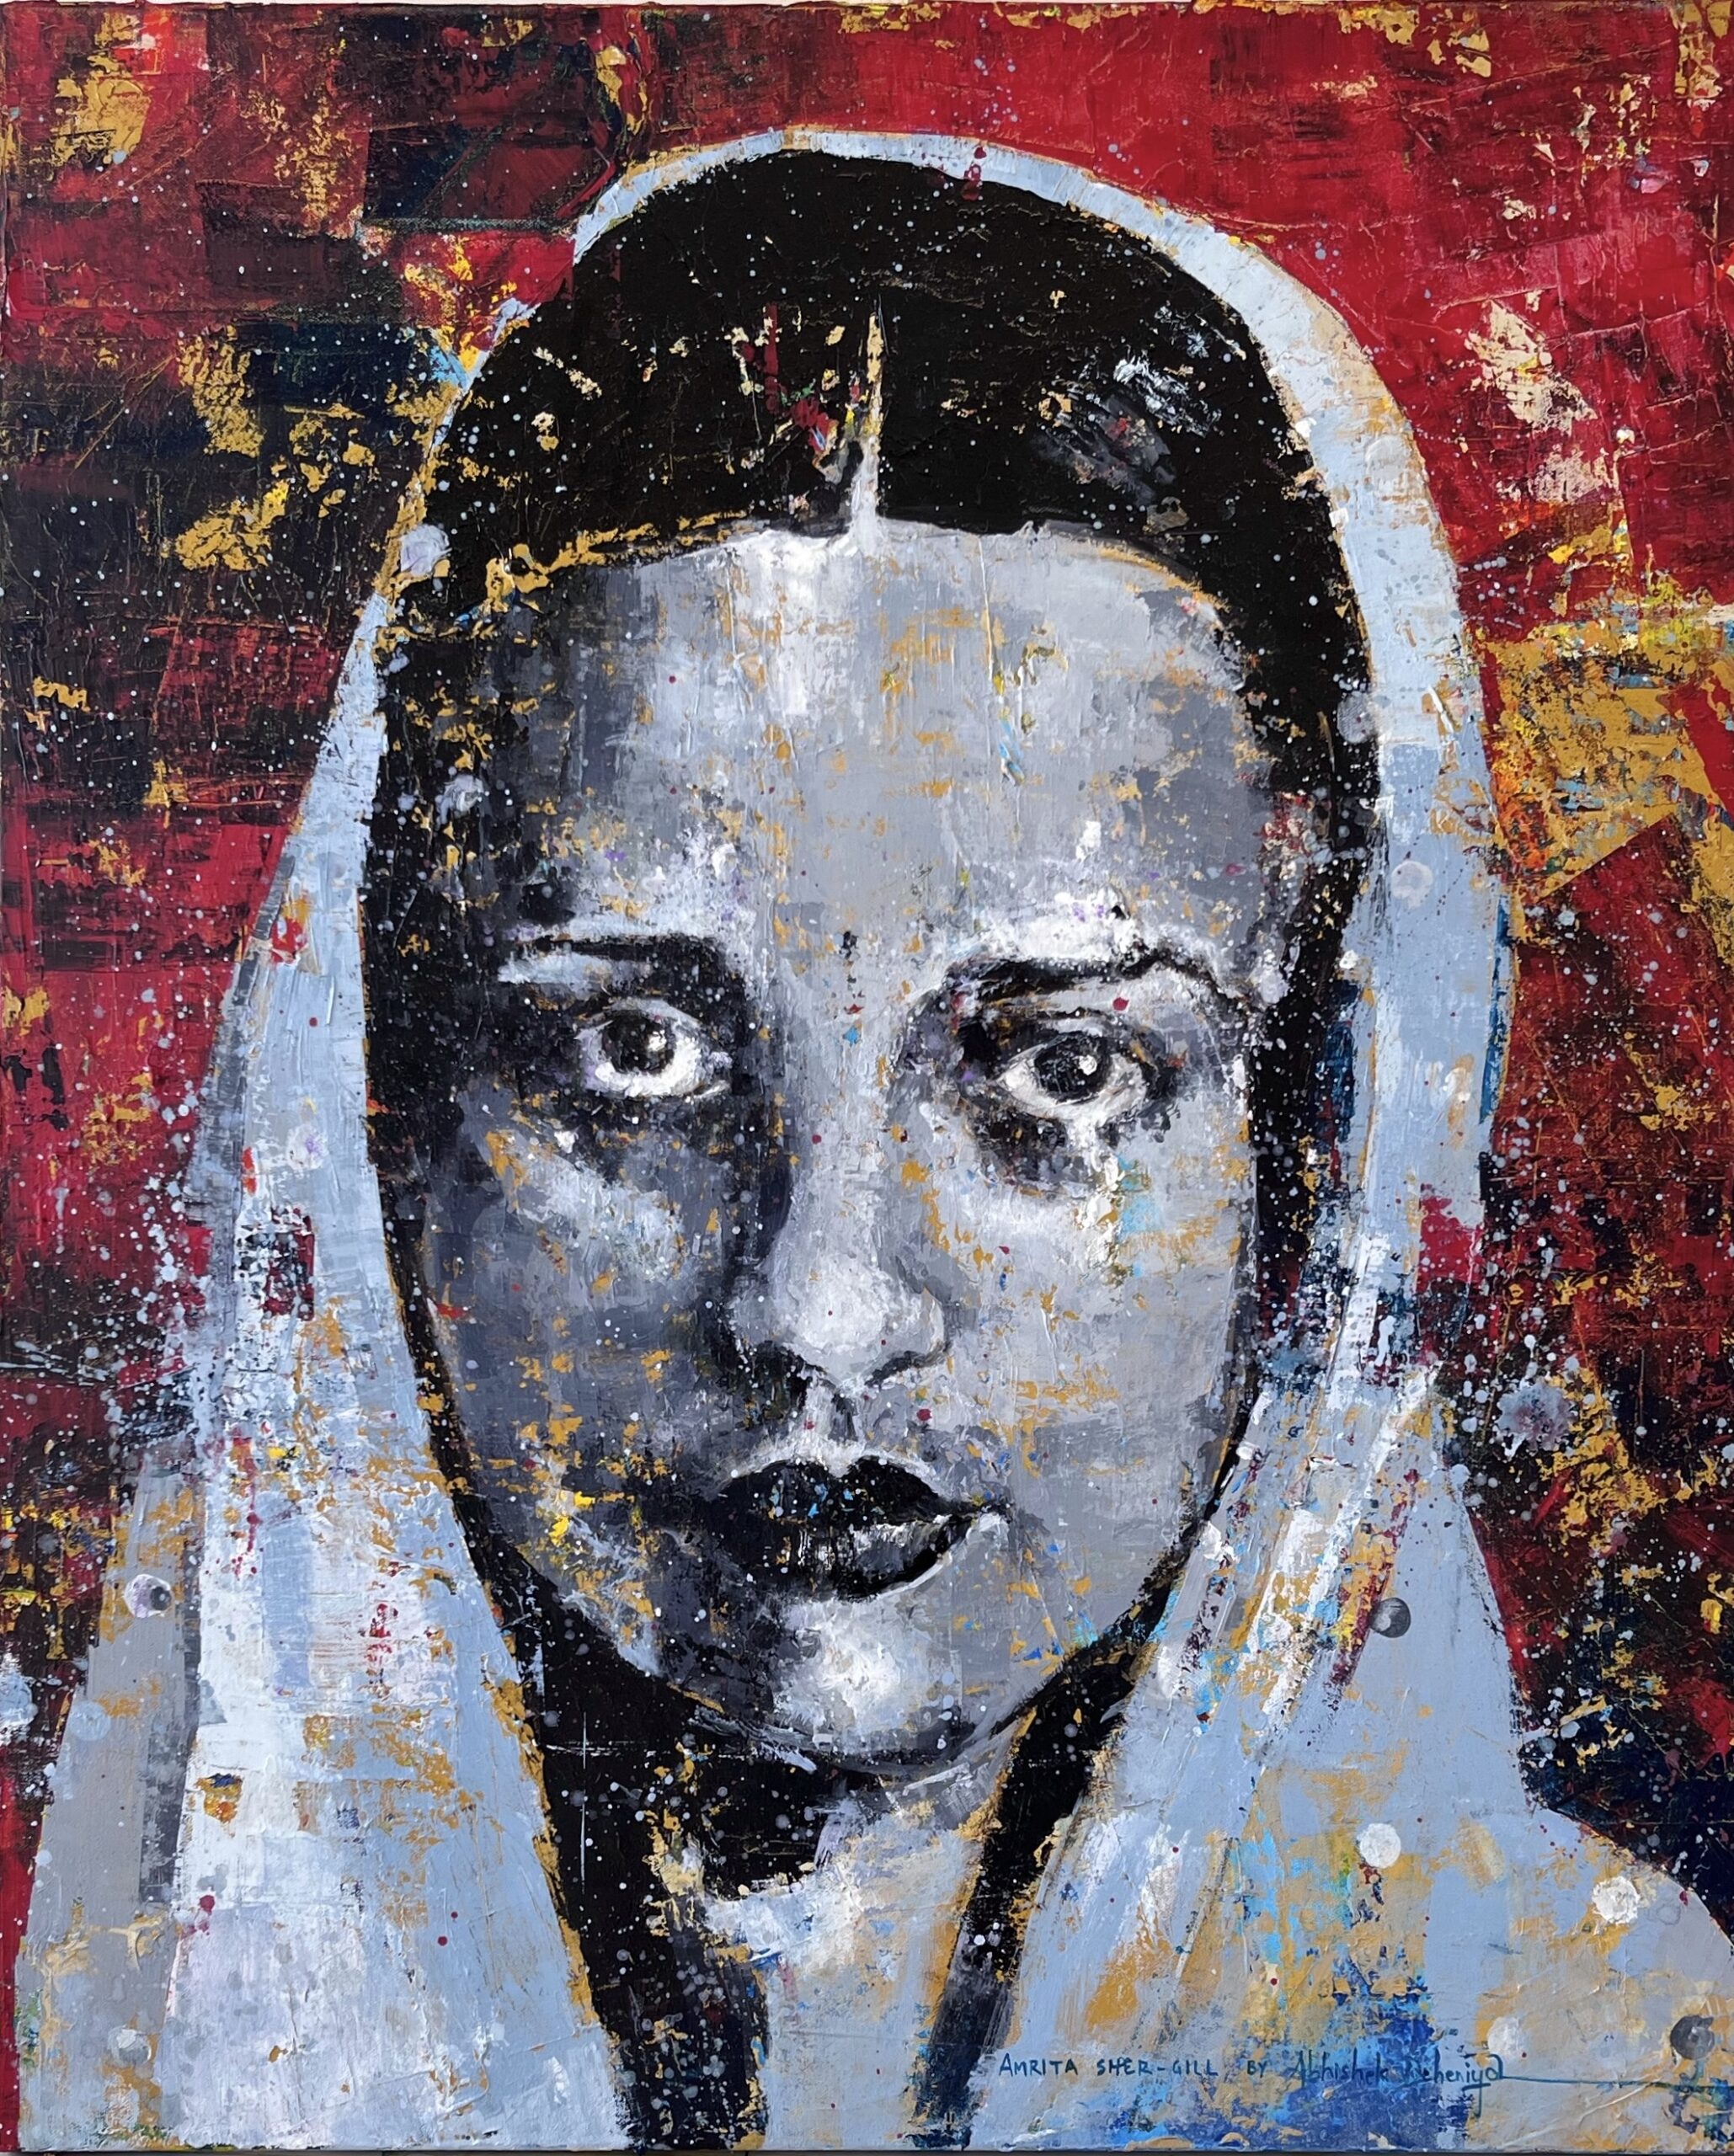 Portrait of Amrita Sher-Gill, a pioneer Indian artist. Texture acrylic painting by Abhishek Deheriya